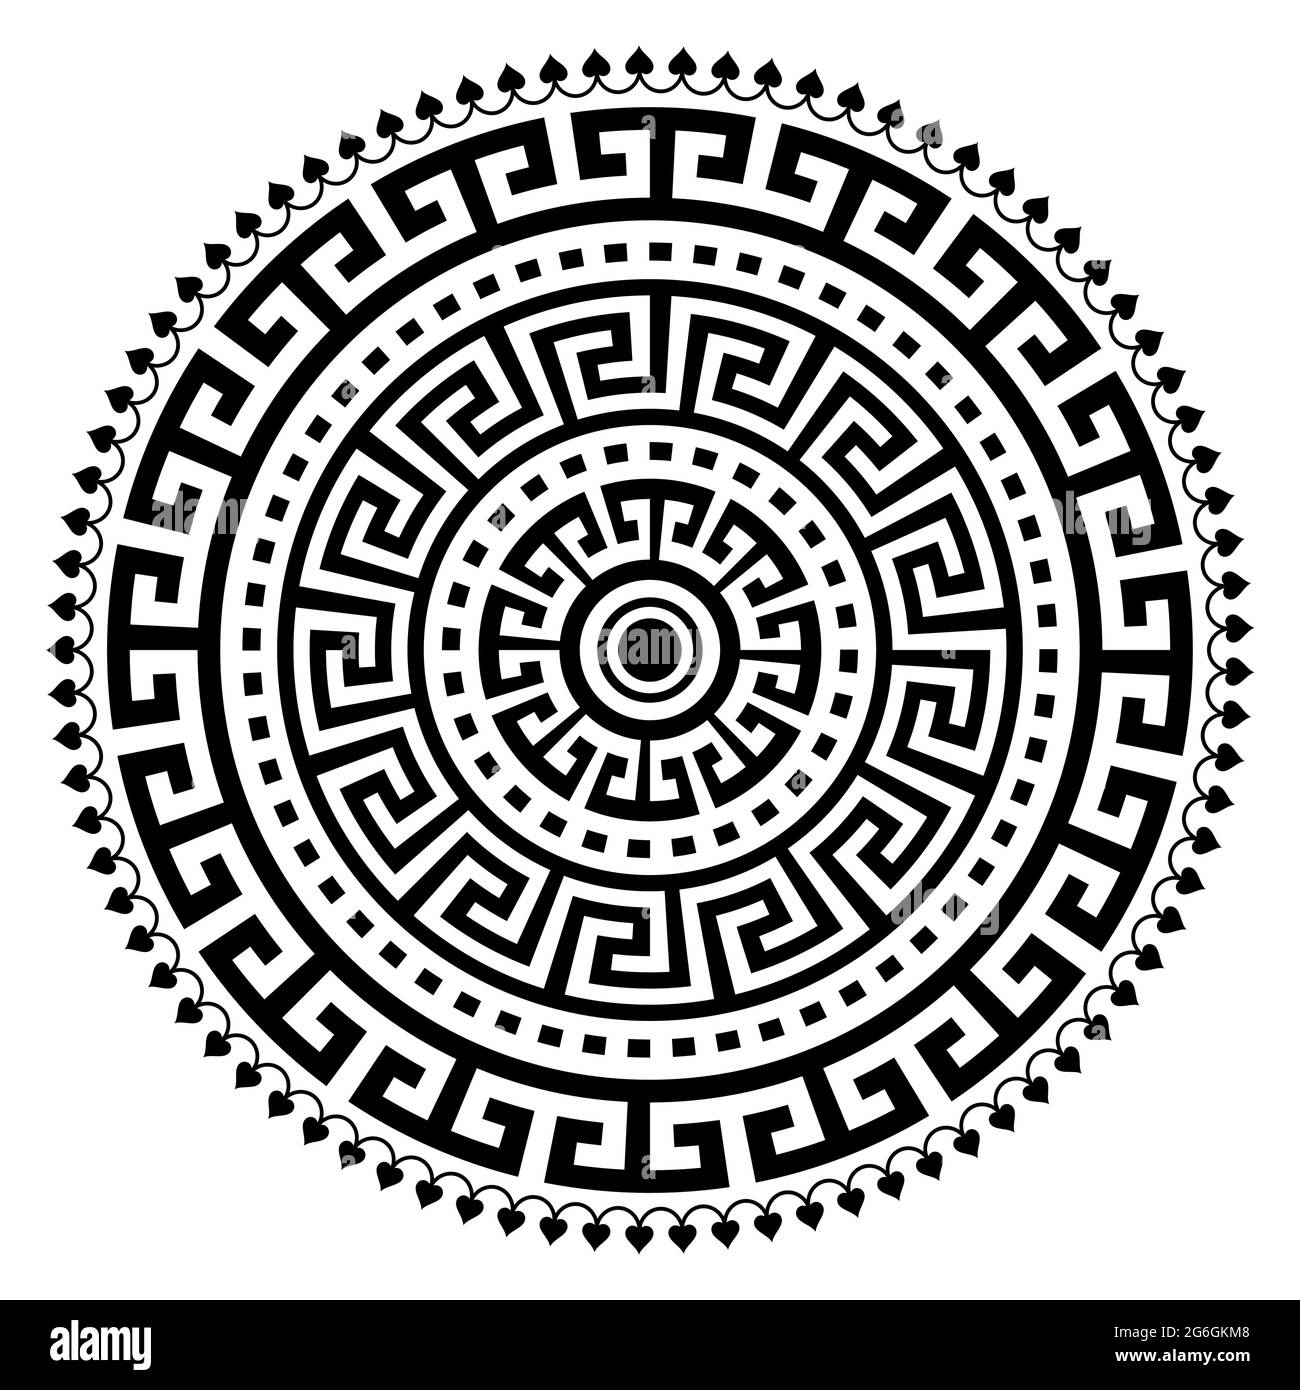 Greek vector ancient vase mandala design with key pattern, geometric black boho pattern in black on white background Stock Vector